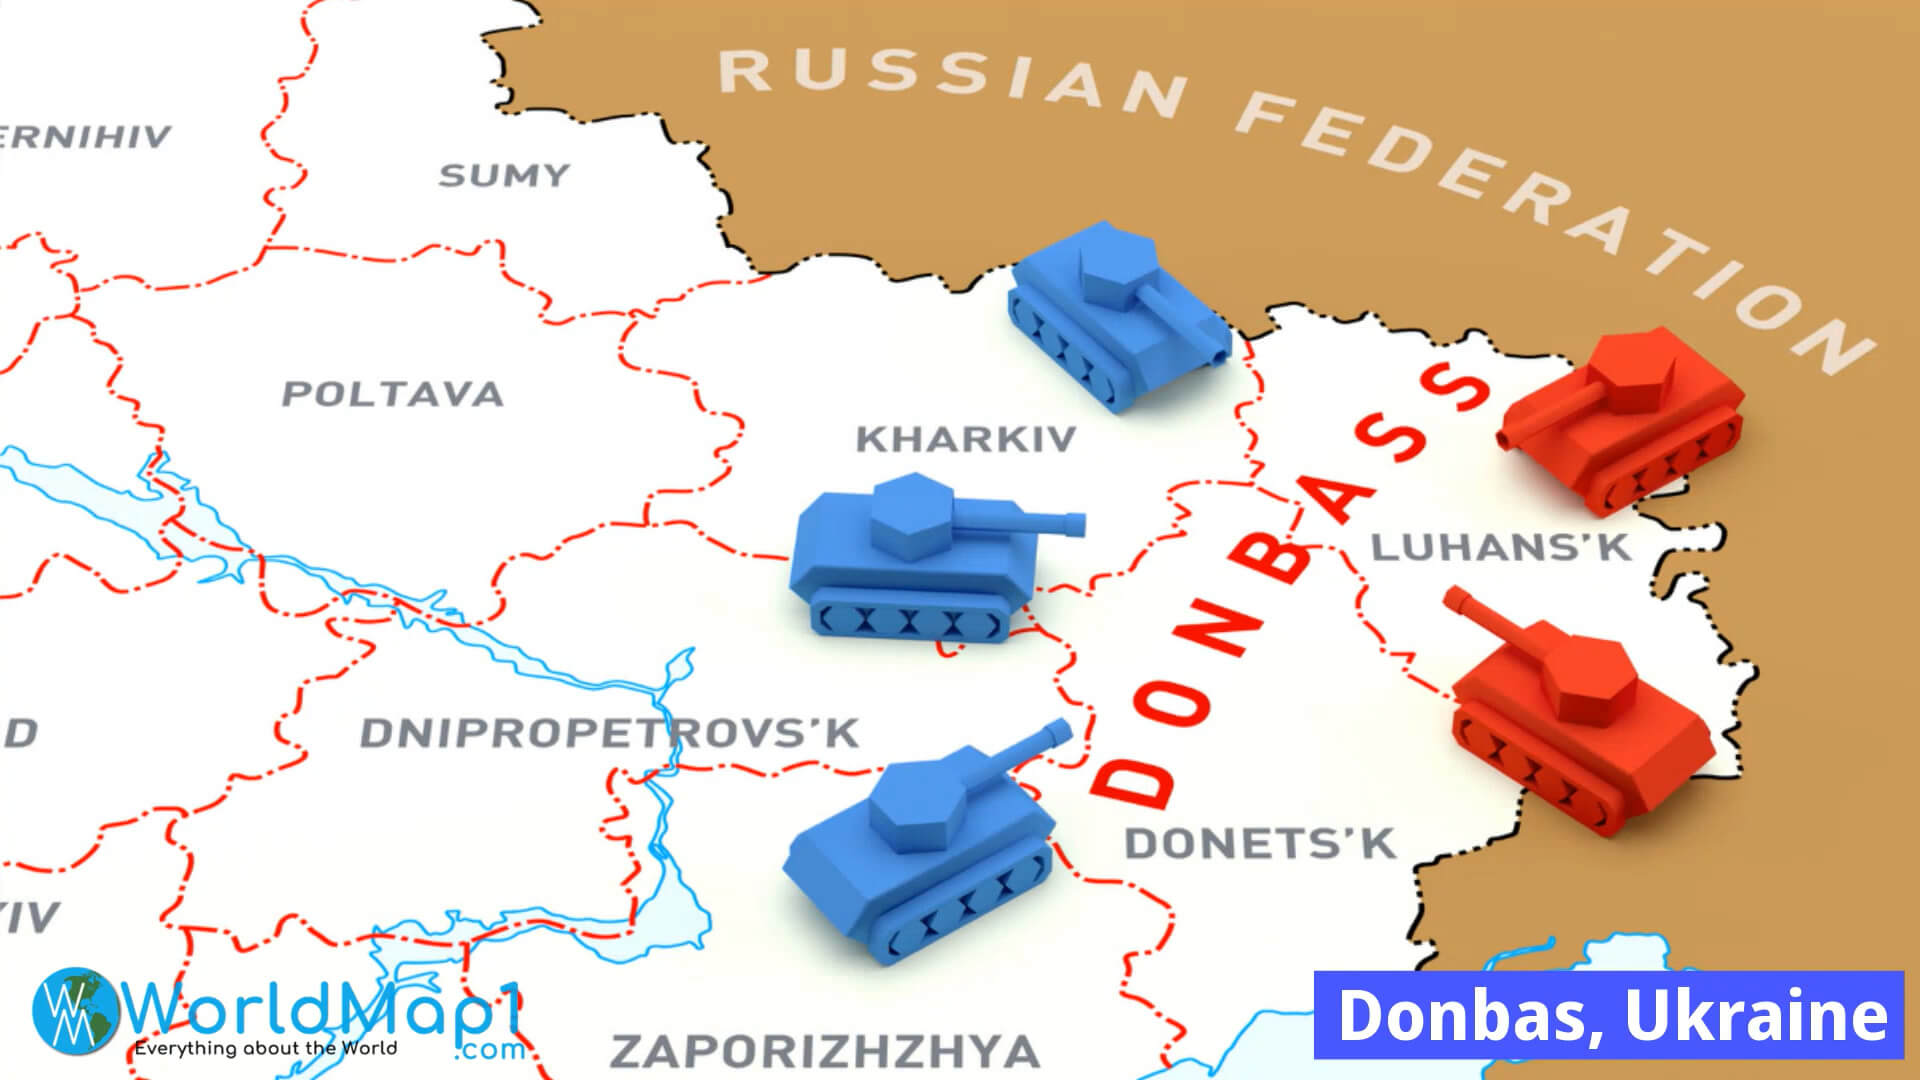 Donbas Region in Ukraine